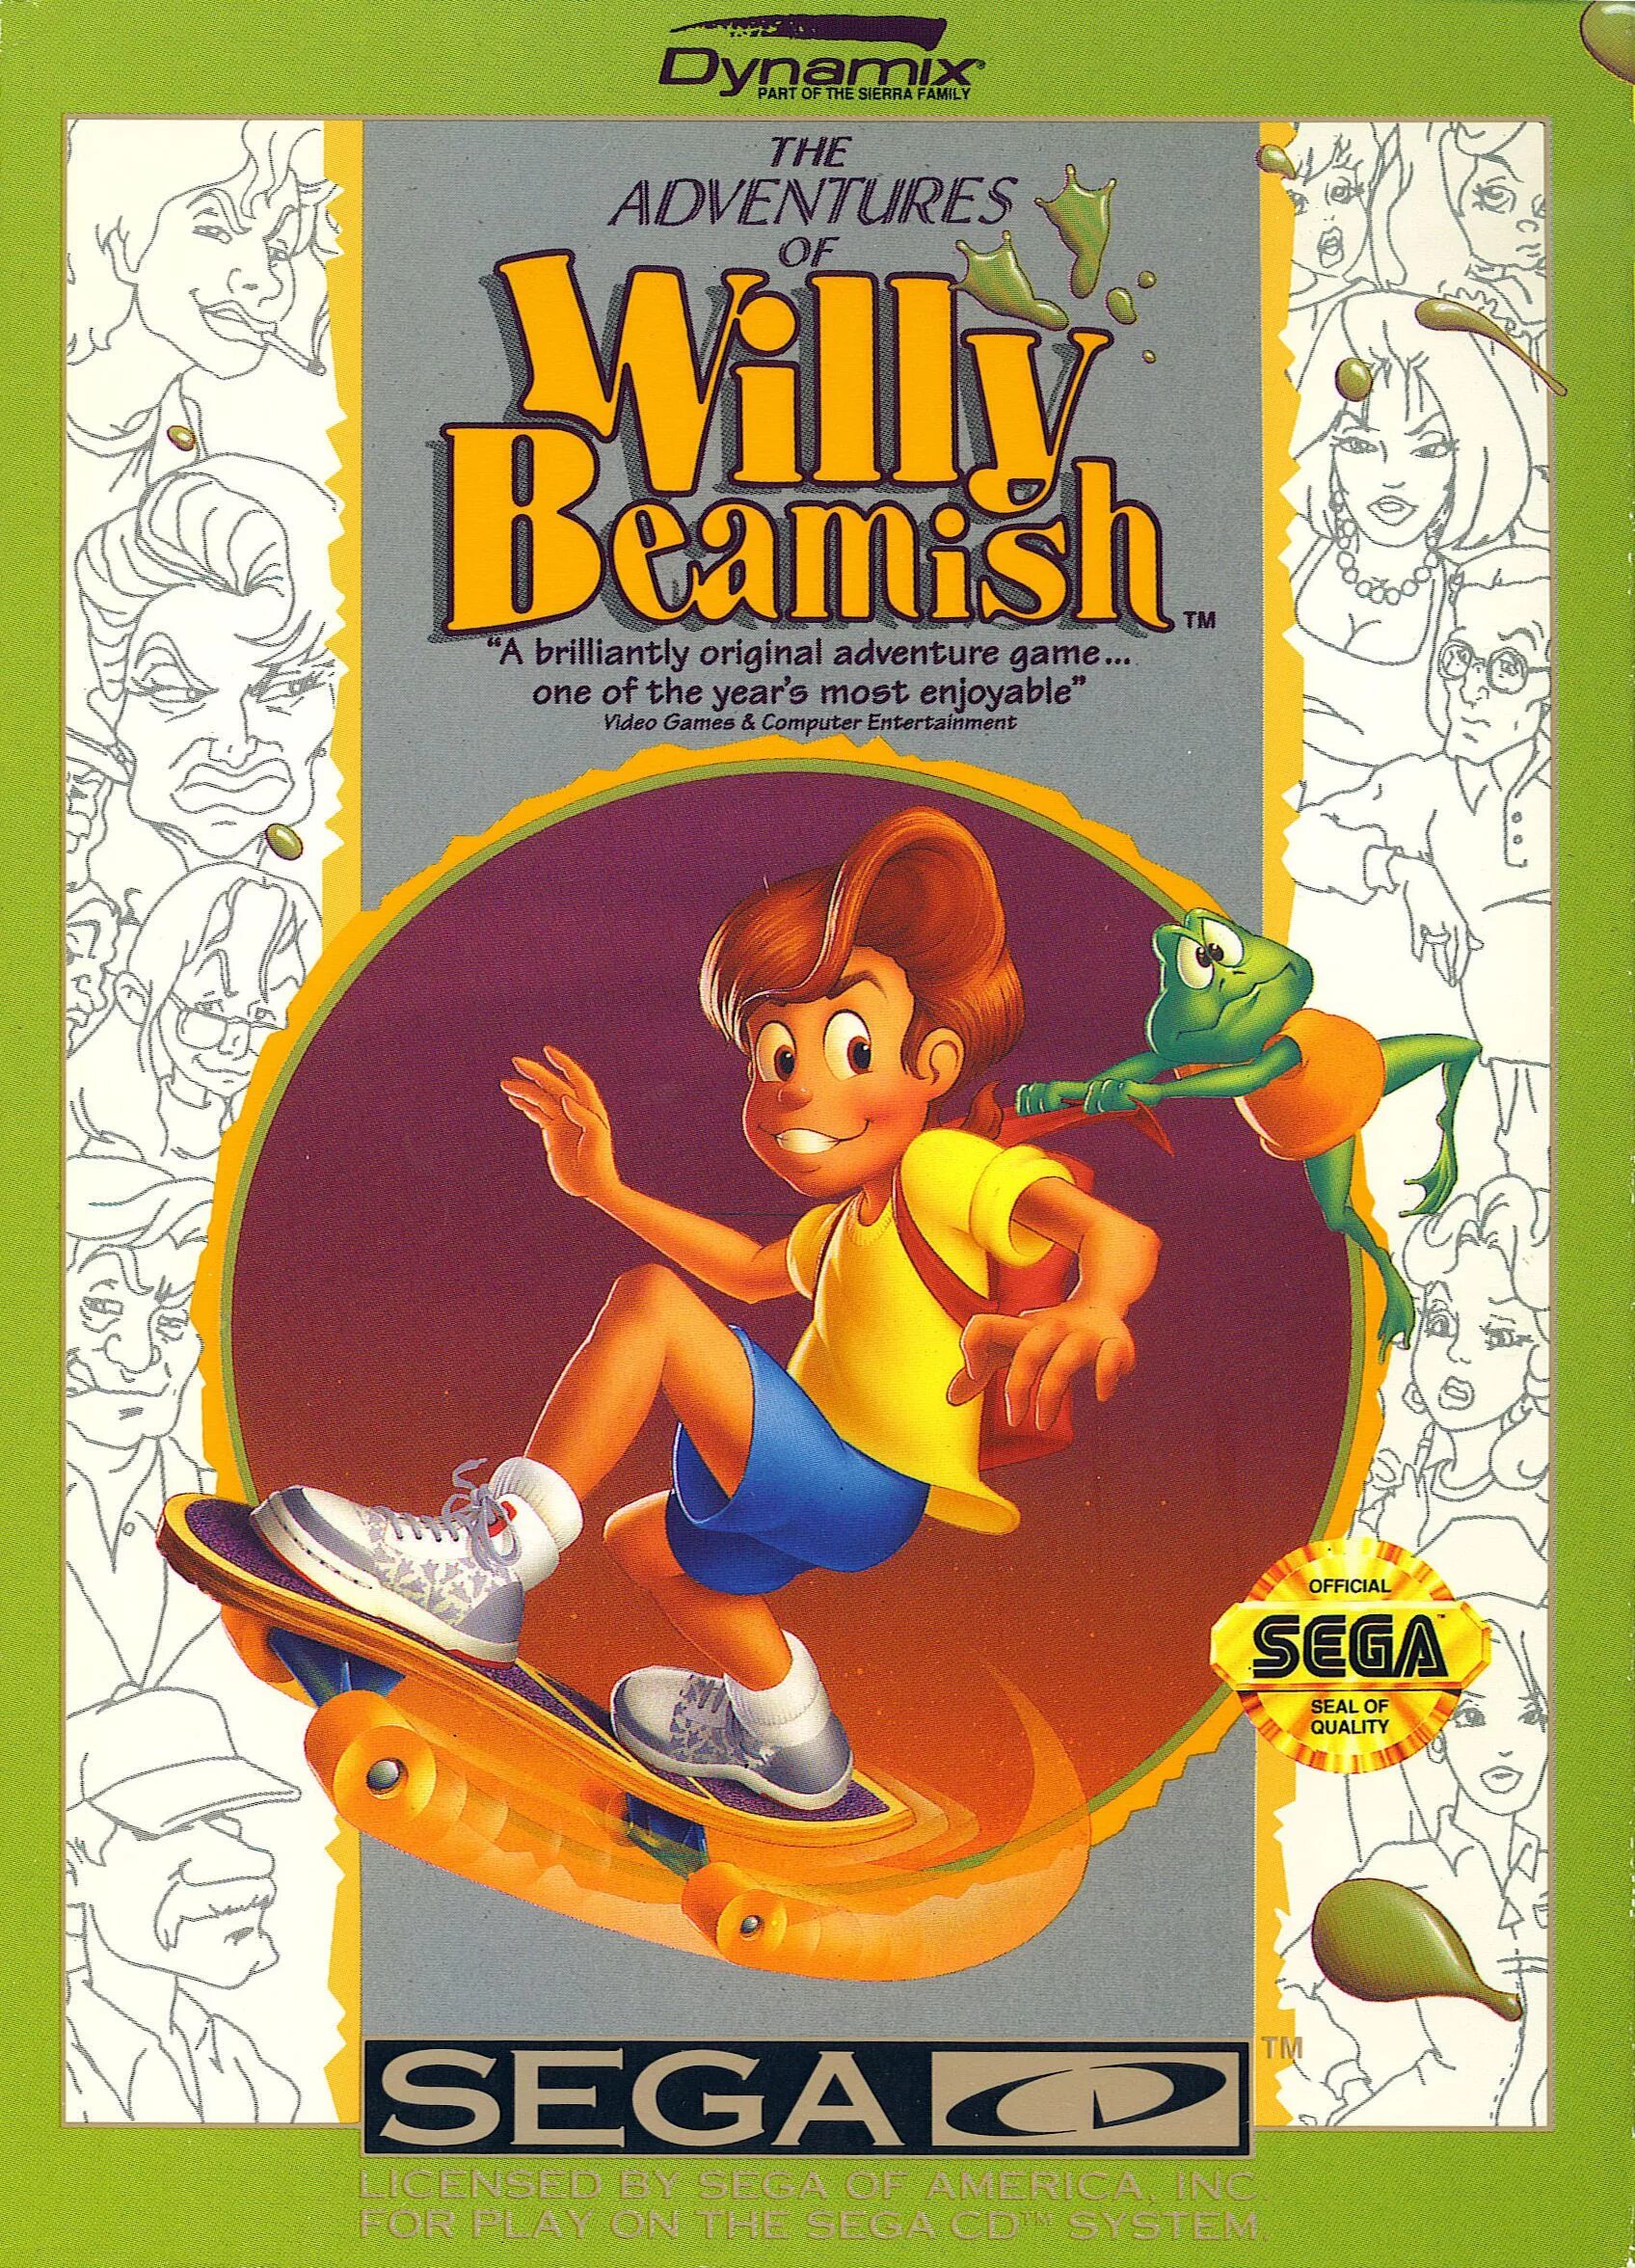 The adventures. The Adventures of Willy Beamish. Adventure. Adventures of Willy Beamish, the Beamish Sega CD прохождение. Вкус Вилли продукты сега.